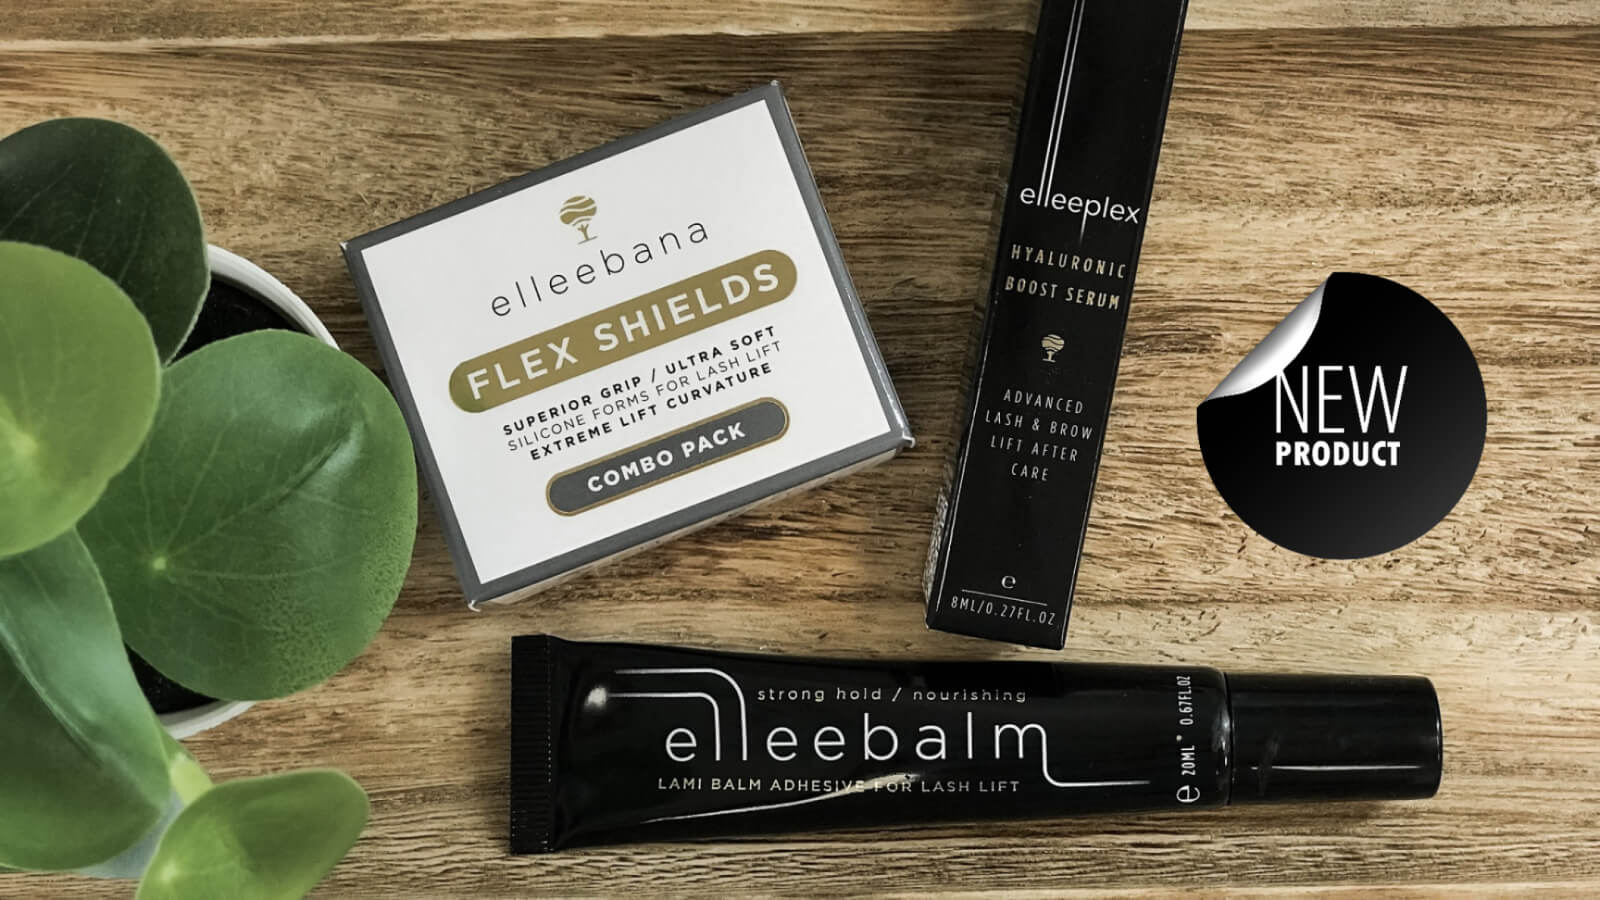 New Arrival Elleebana Products